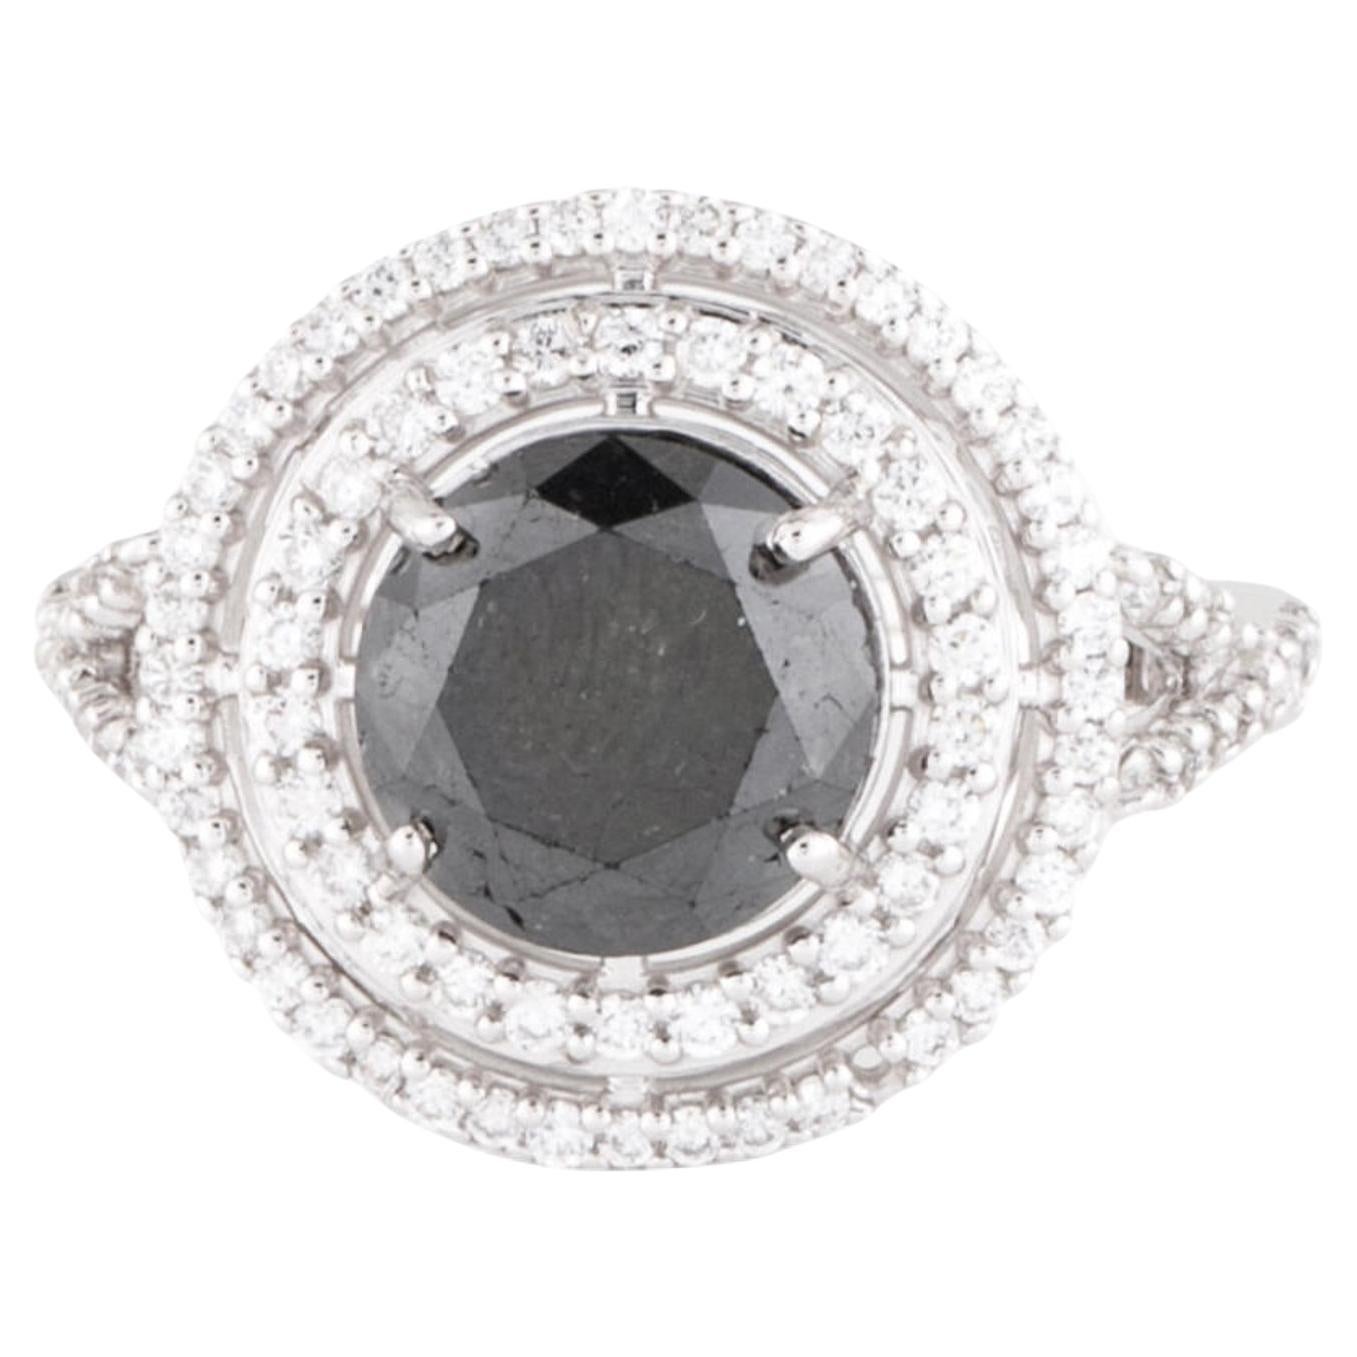 Elegant 3.67ct Diamond Engagement Ring, Size 7 - Stunning Statement Jewelry For Sale